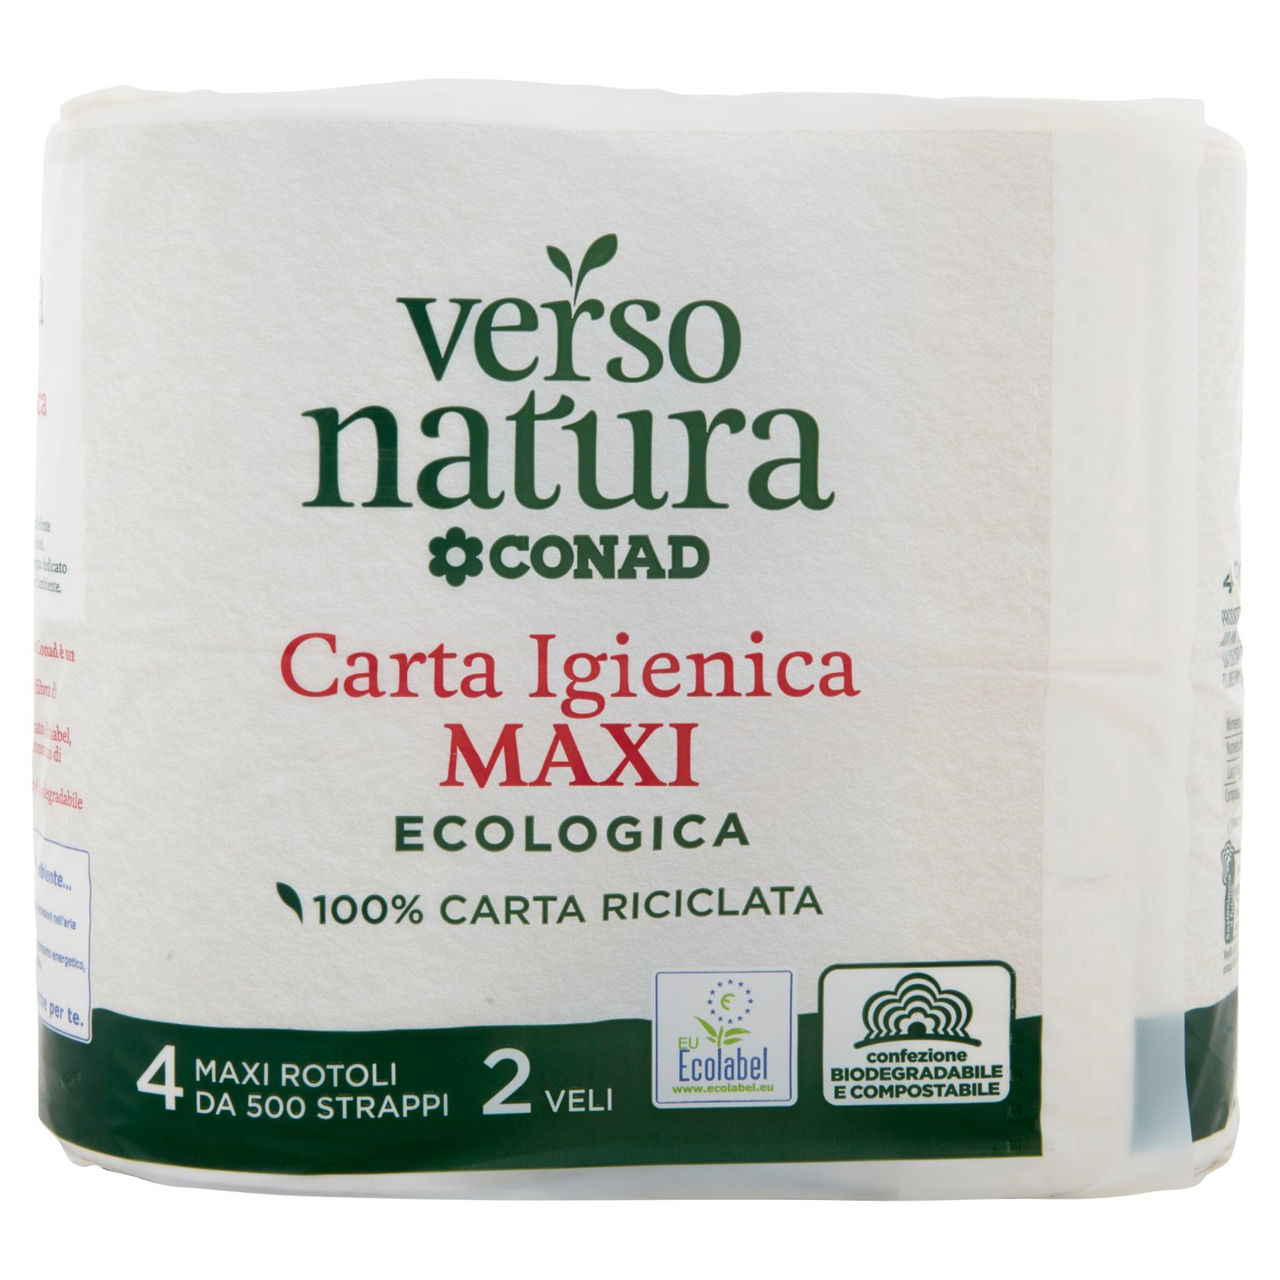 Carta Igienica Ecologica 4 Maxi Rotoli Conad